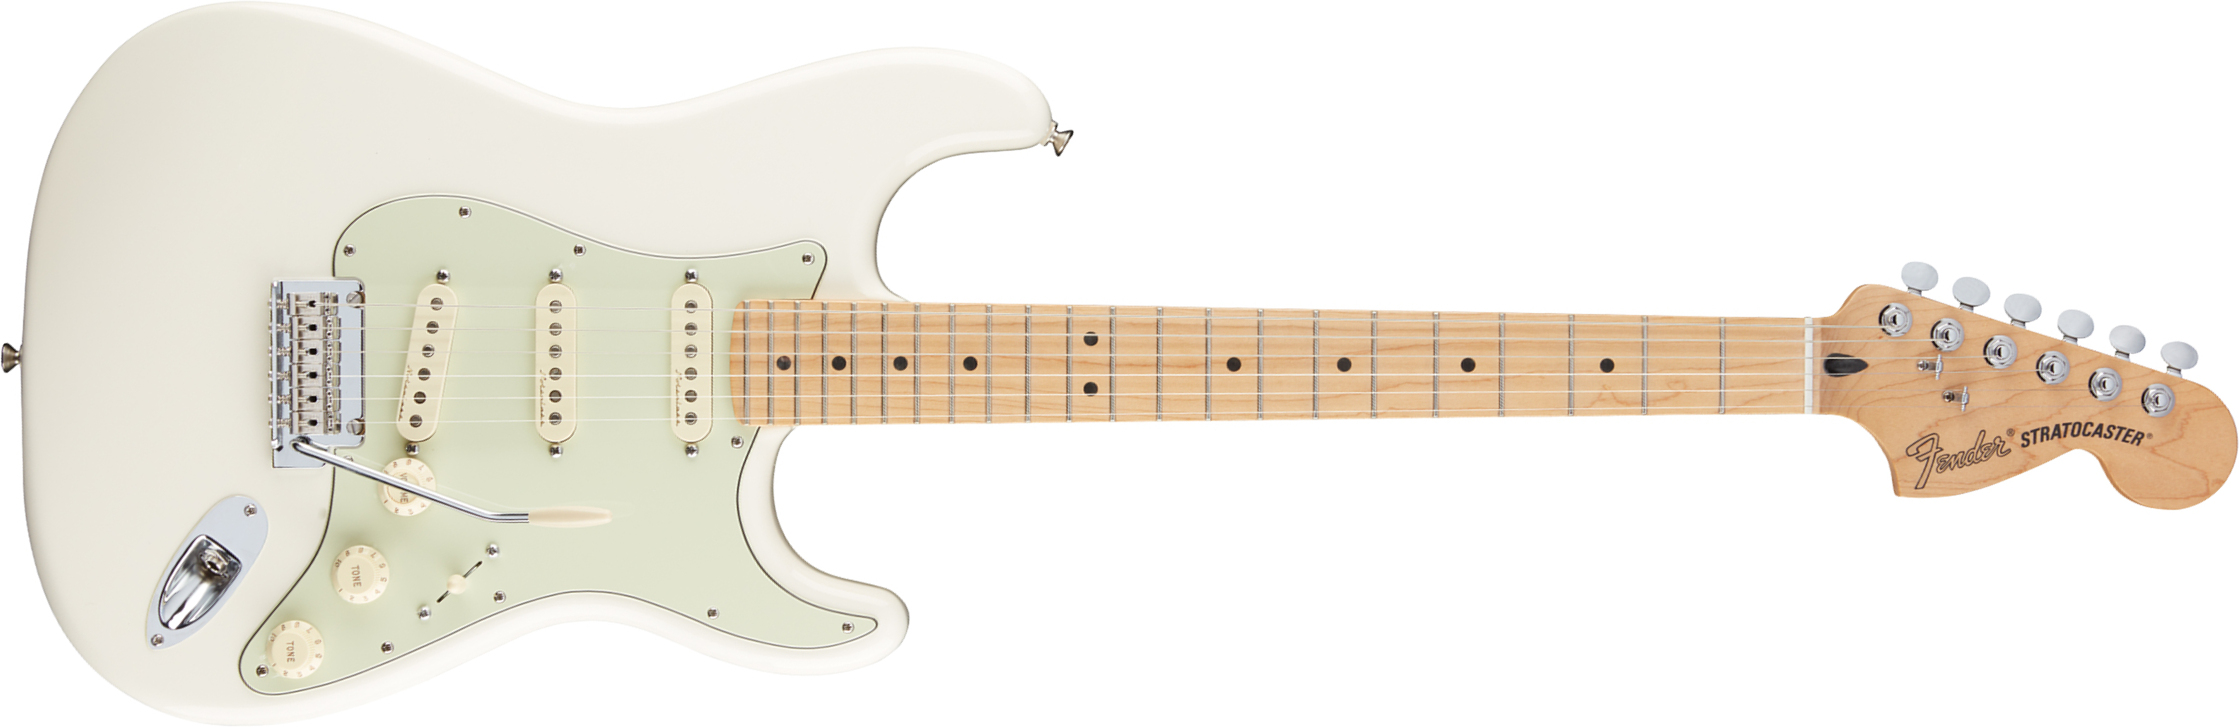 Fender Strat Deluxe Roadhouse Mex Mn - Olympic White - Guitarra eléctrica con forma de str. - Main picture